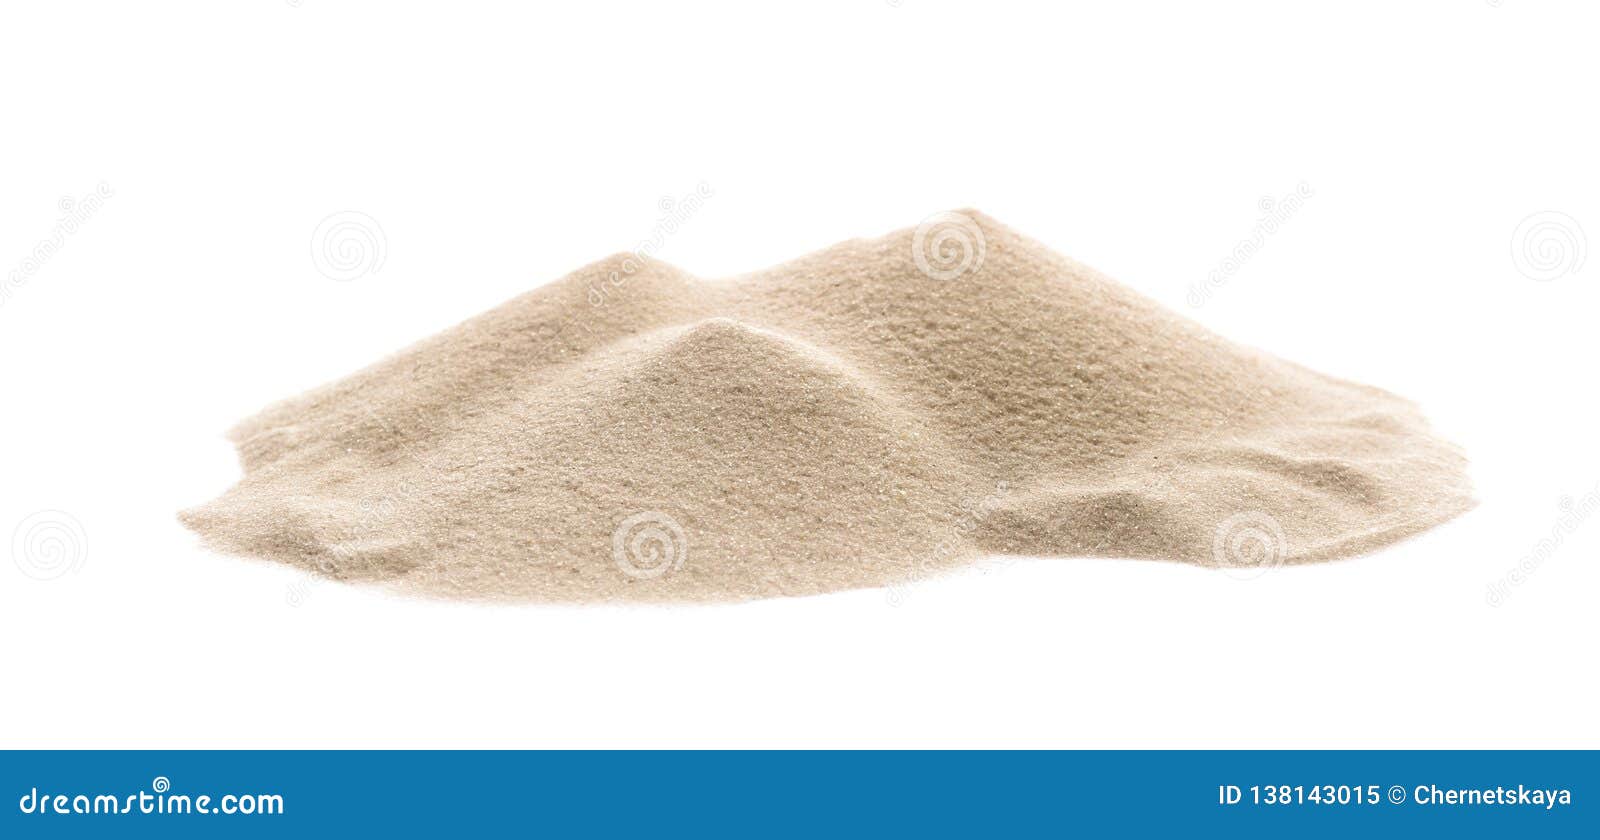 heap of dry beach sand on white